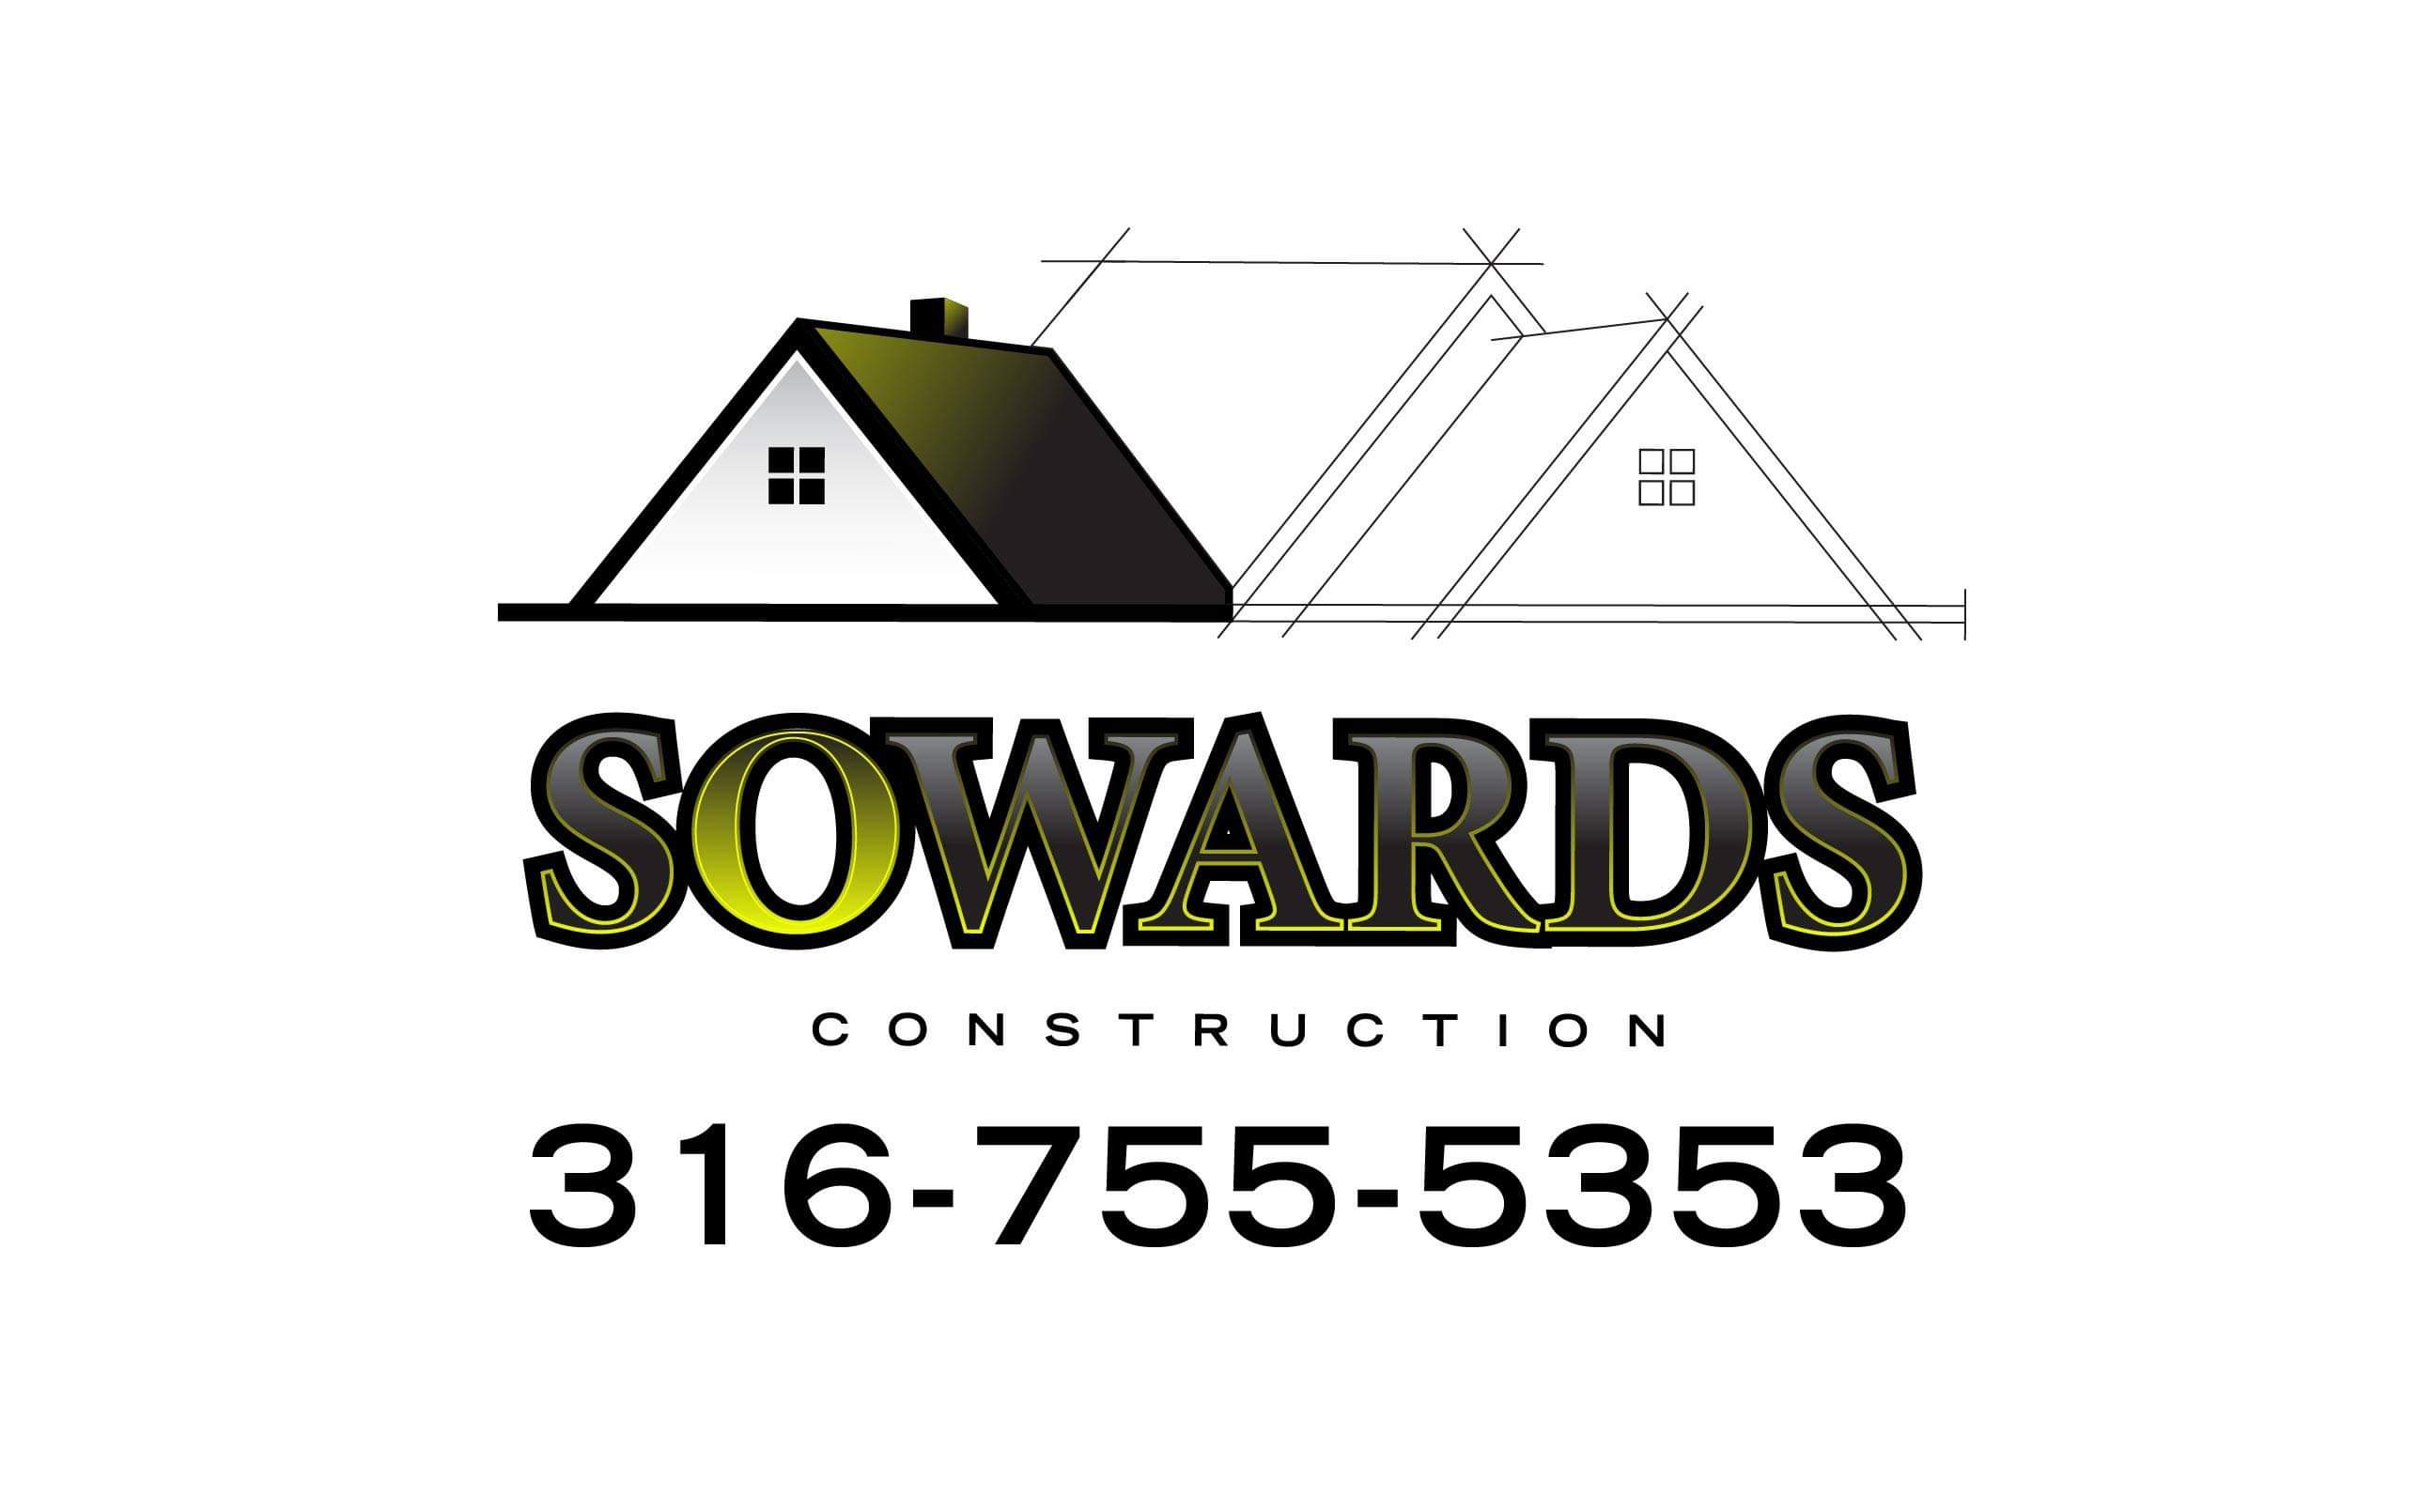 Sowards Construction